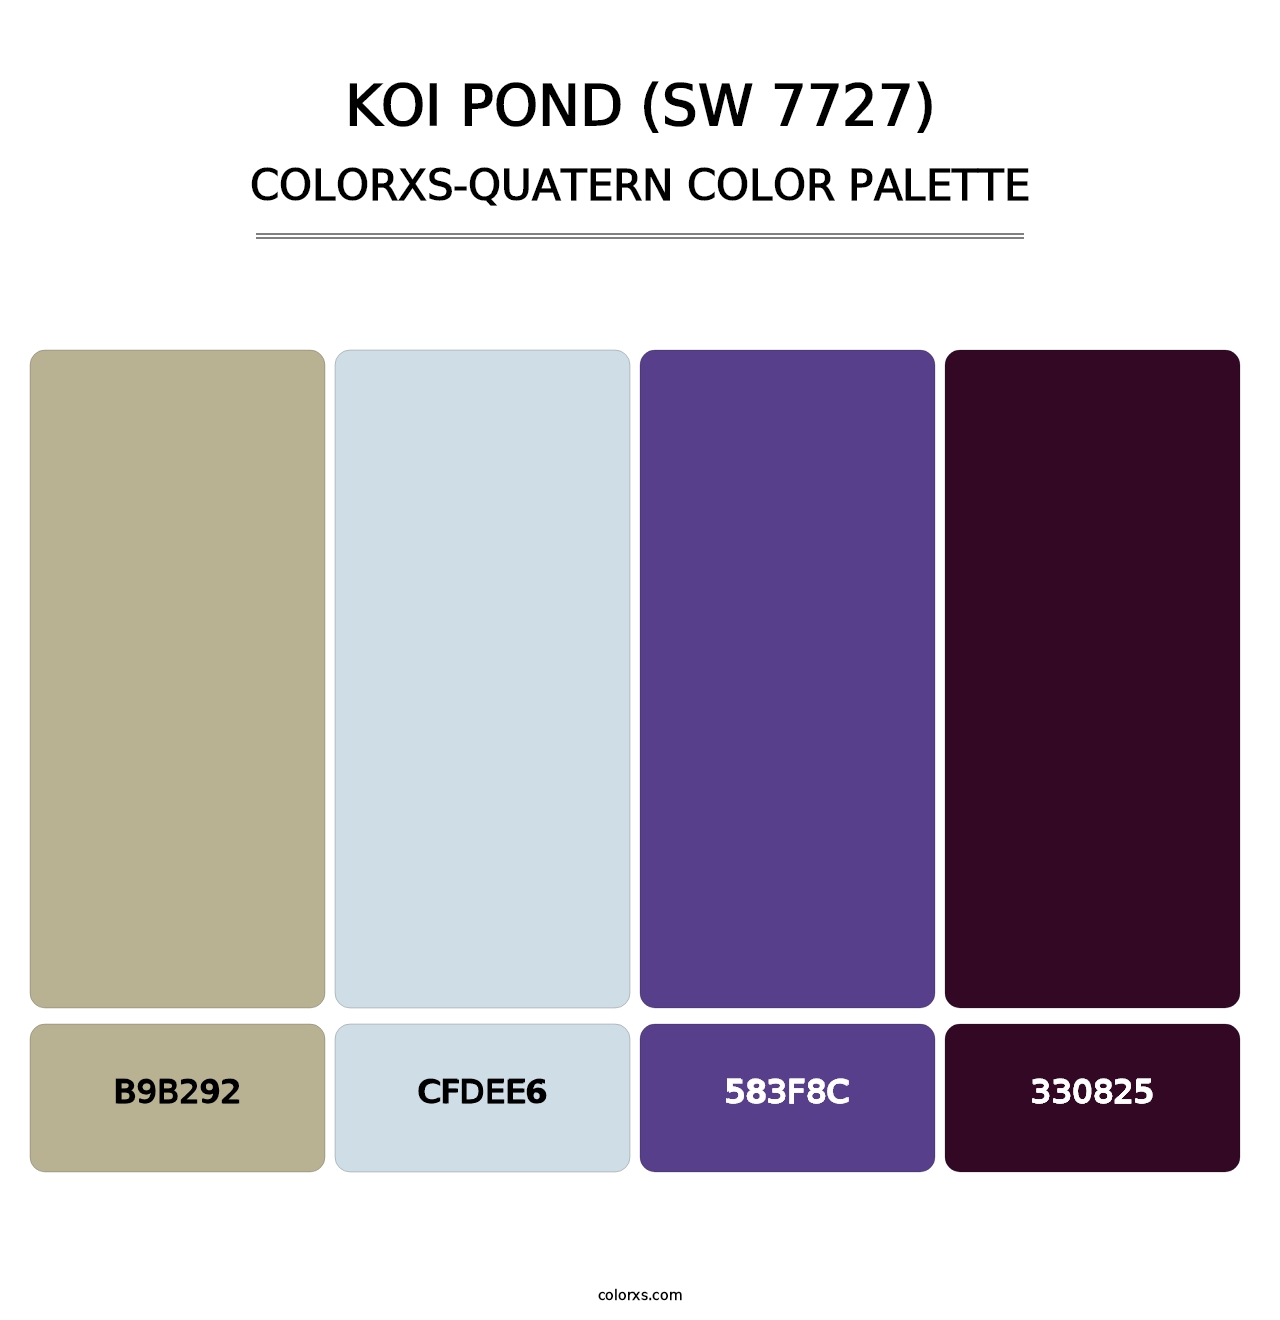 Koi Pond (SW 7727) - Colorxs Quatern Palette